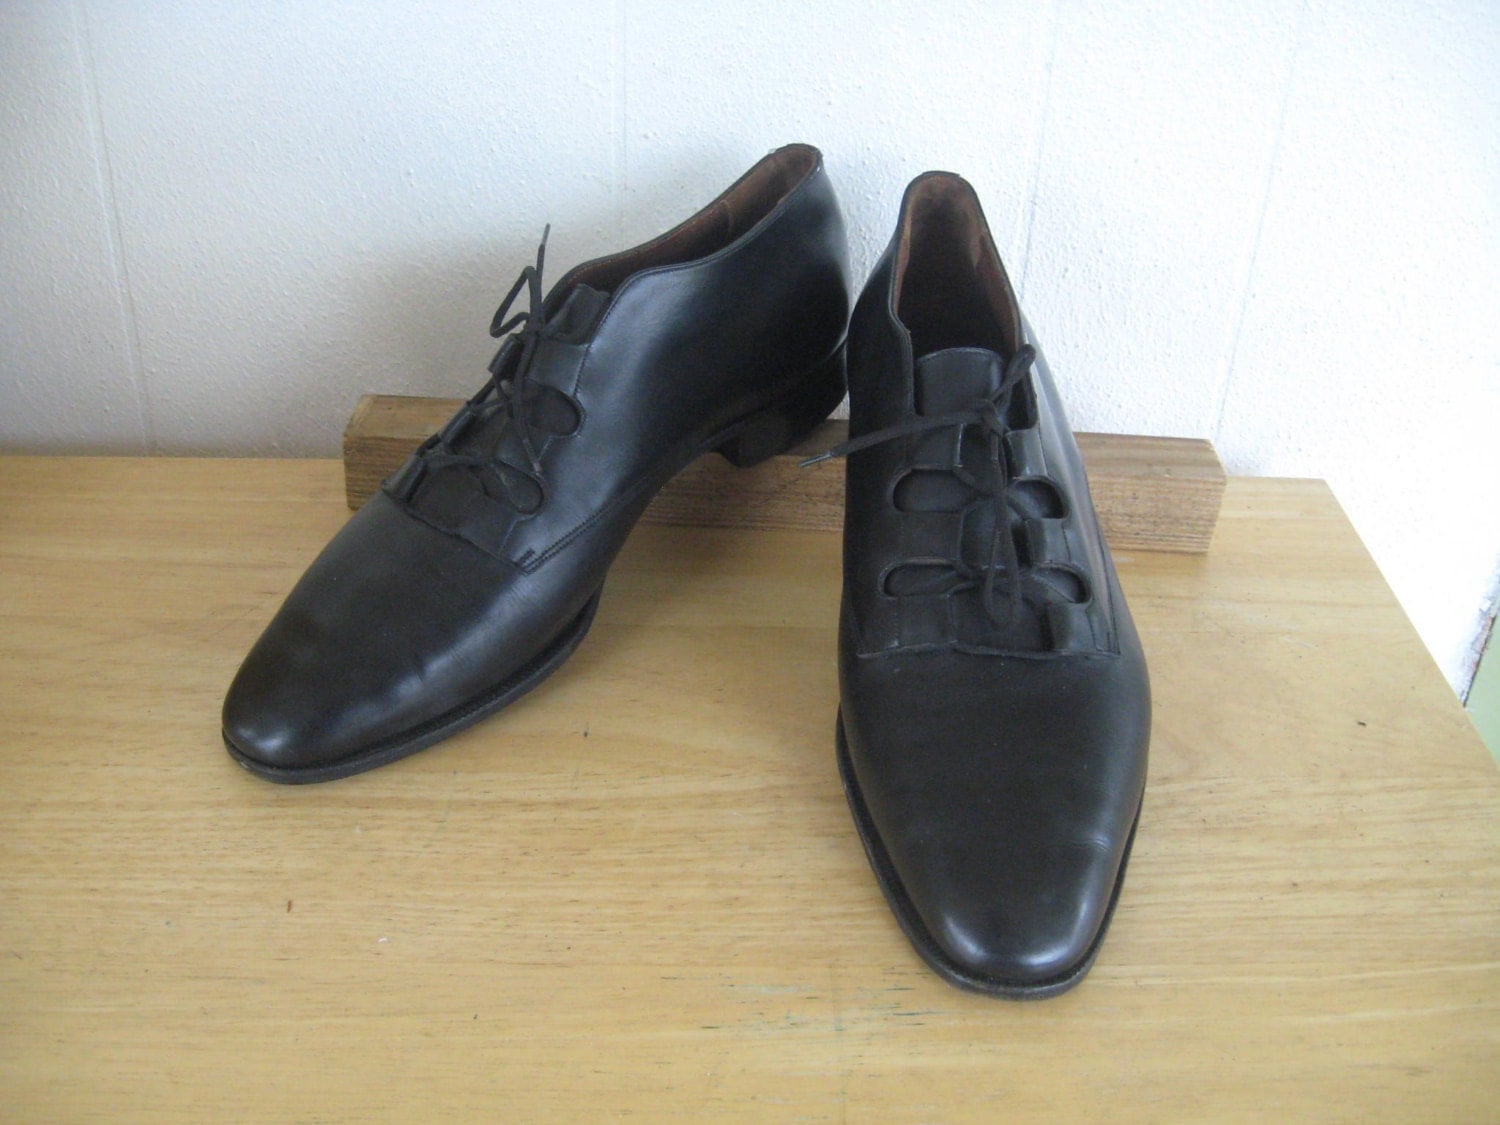 Vintage Mens Shoes 1950s Black Leather Oxfords 50s Fenestrier